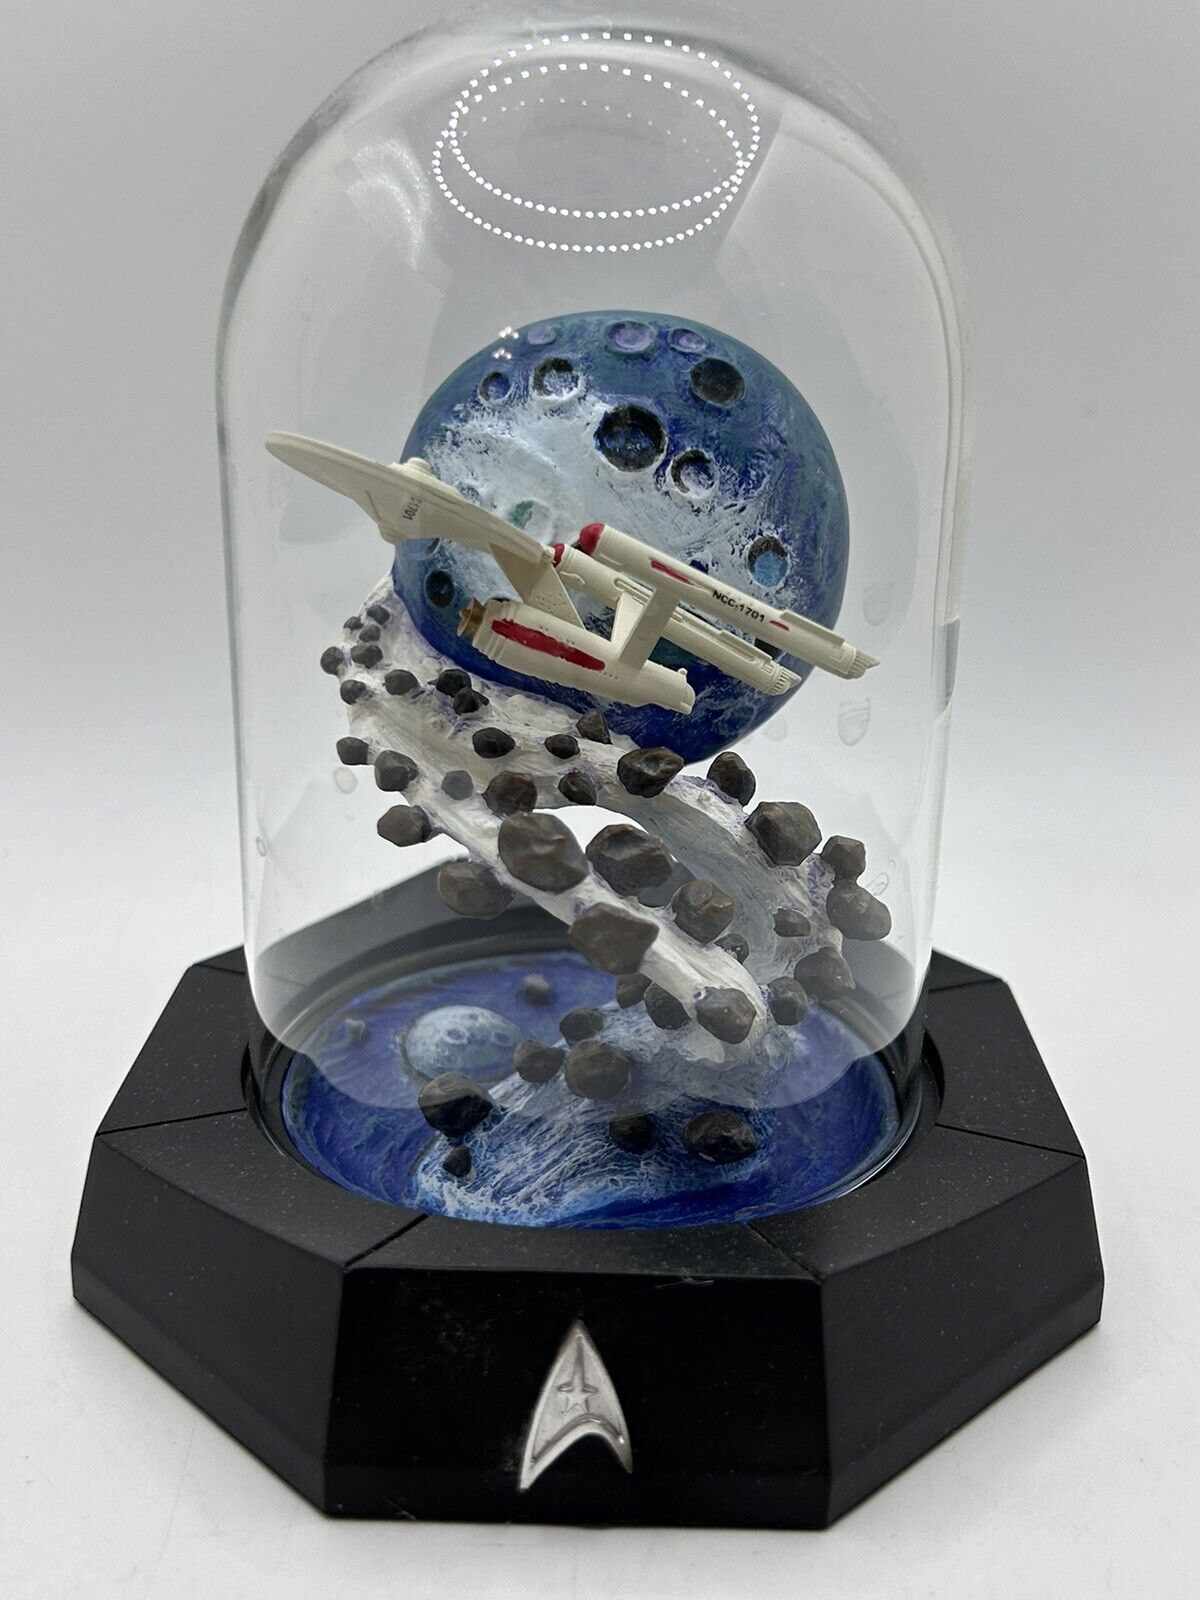 Franklin Mint Star Trek Miniature Sculpture “USS Enterprise NCC-1701” Glass Dome